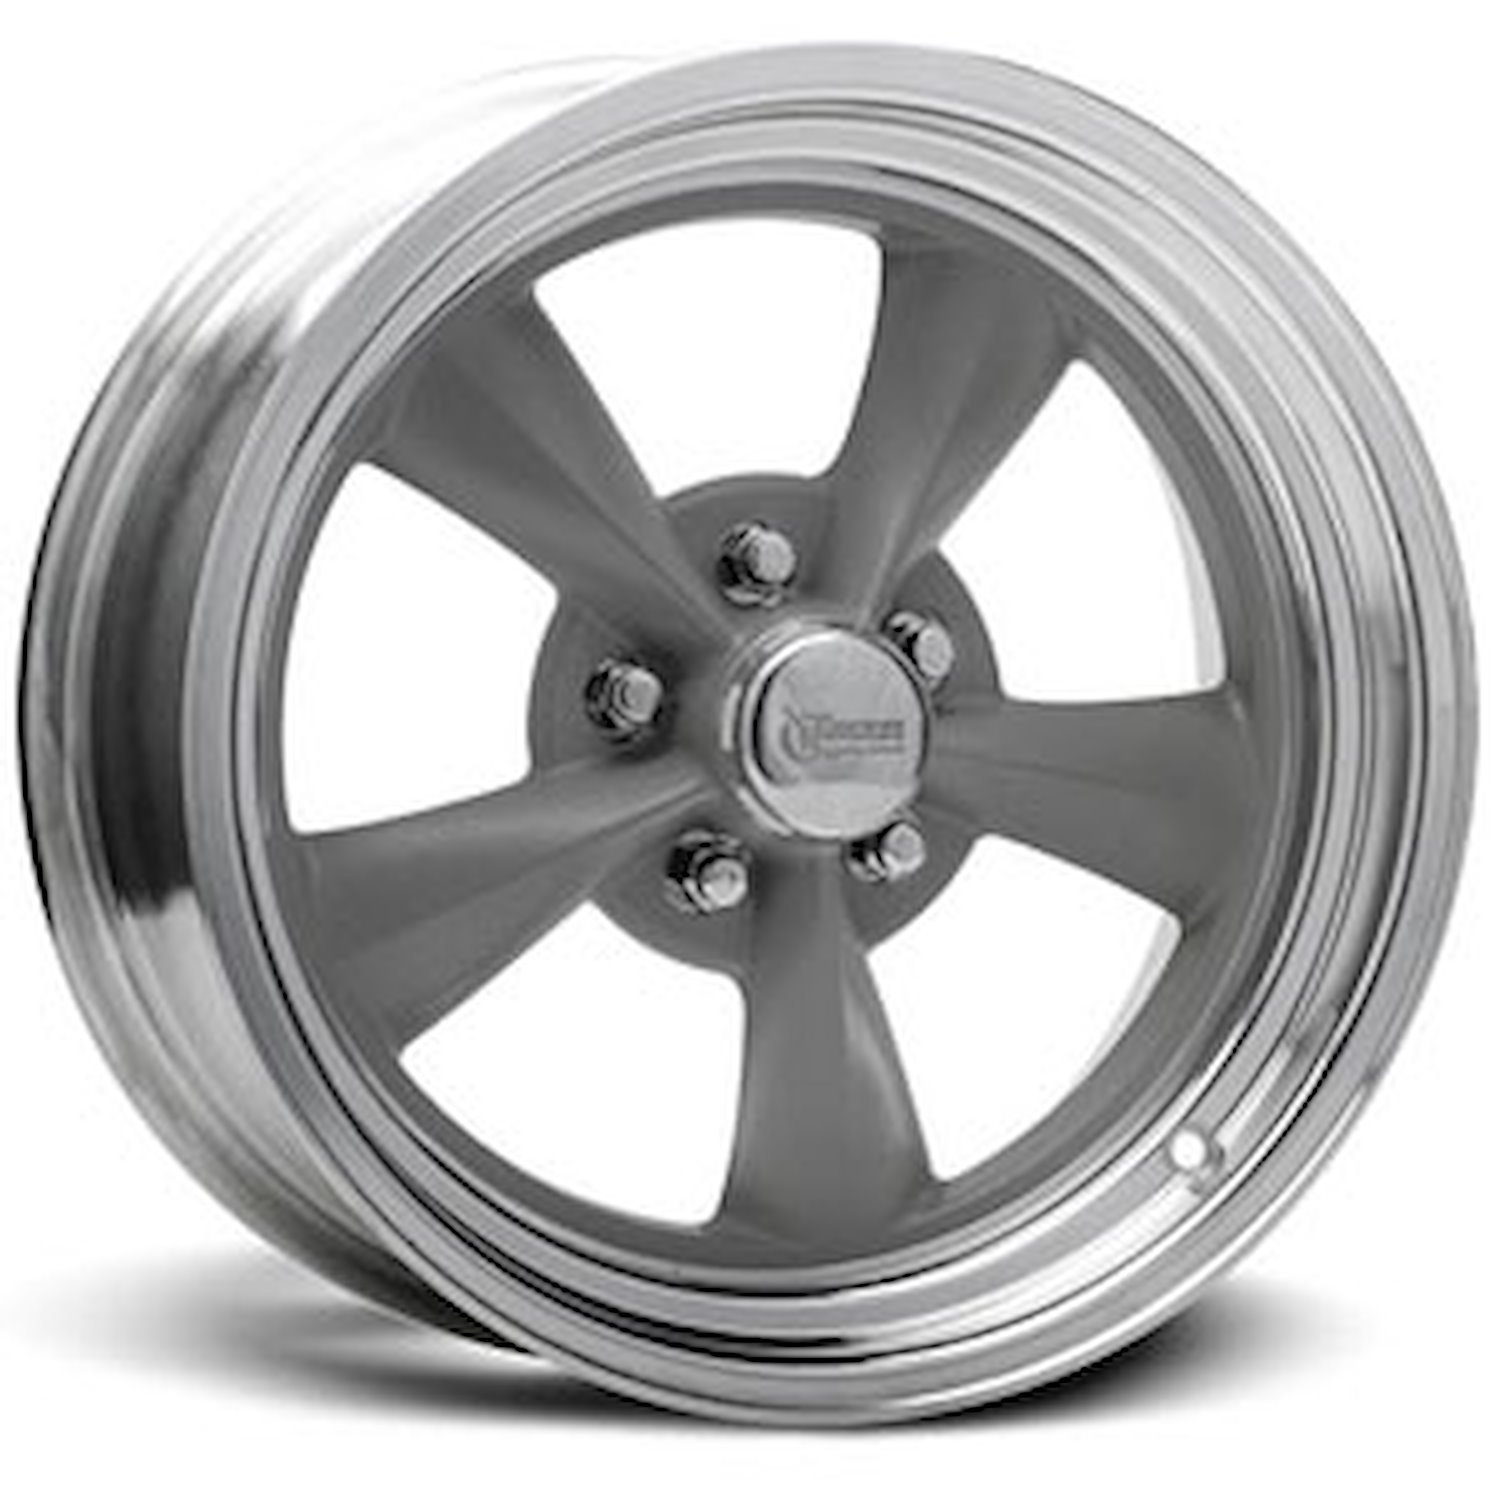 Fuel Wheel - Gray Size: 15" x 6"